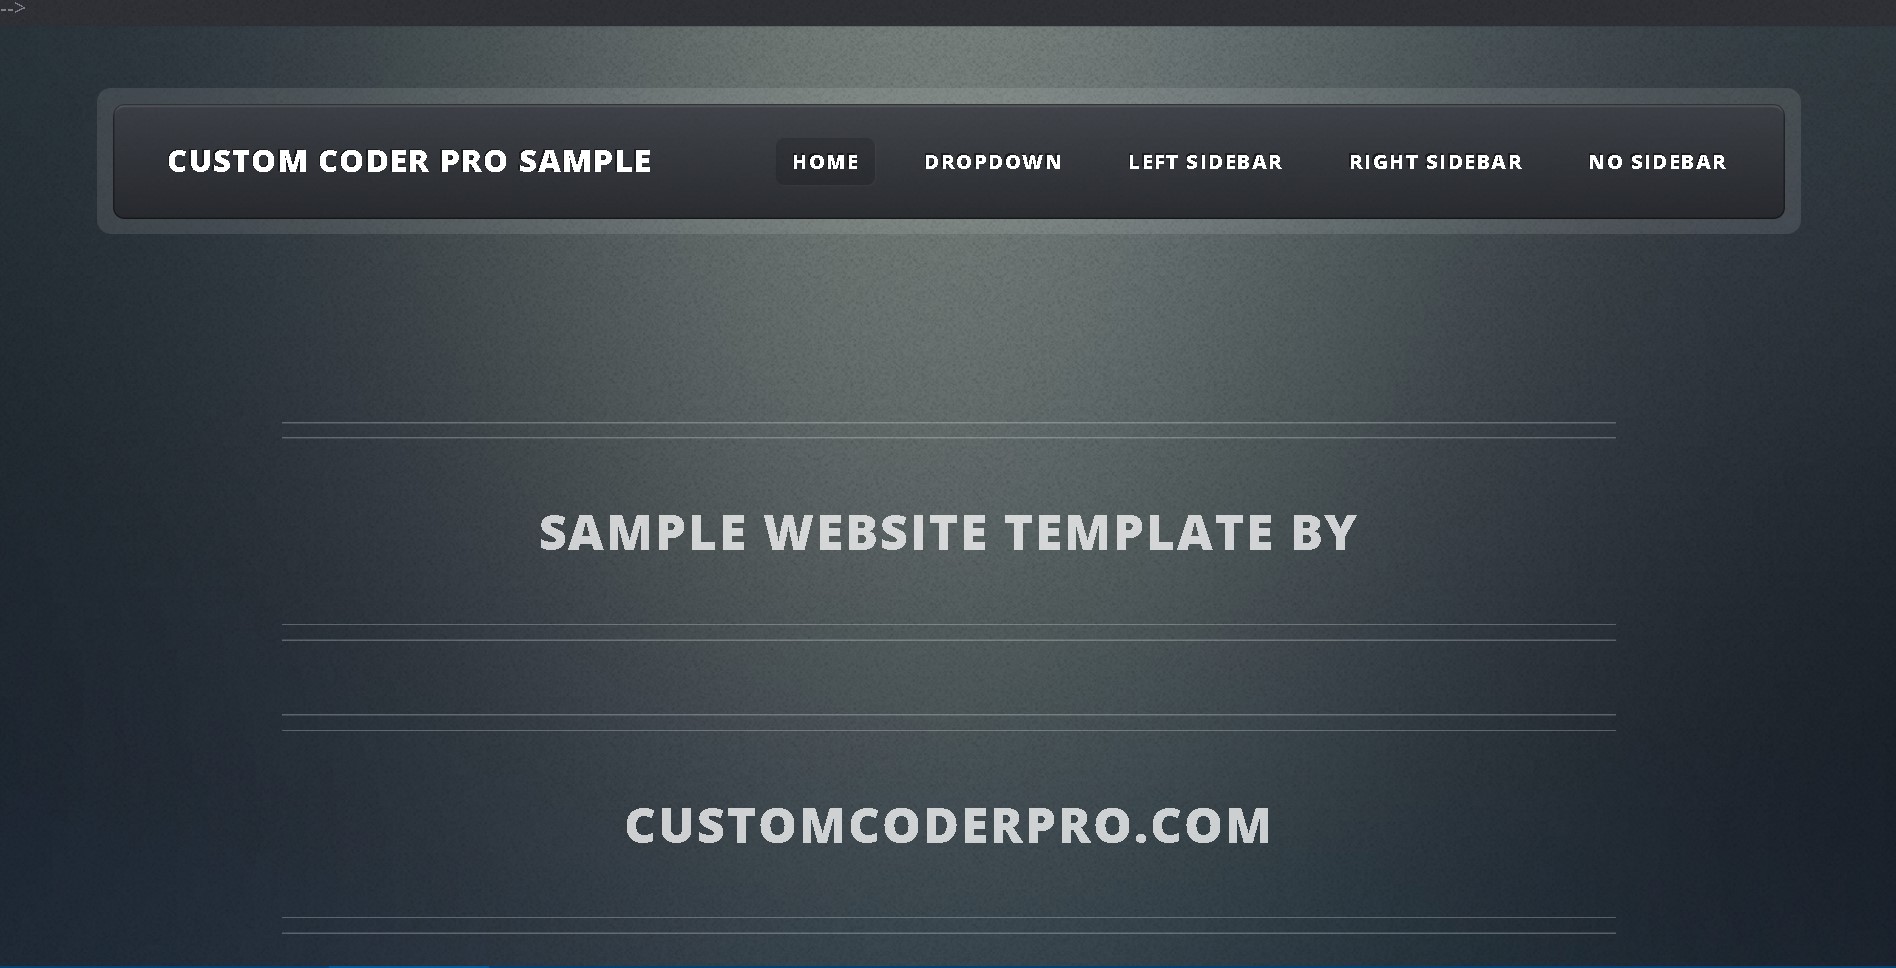 CustomCoderPro.com Sample Website